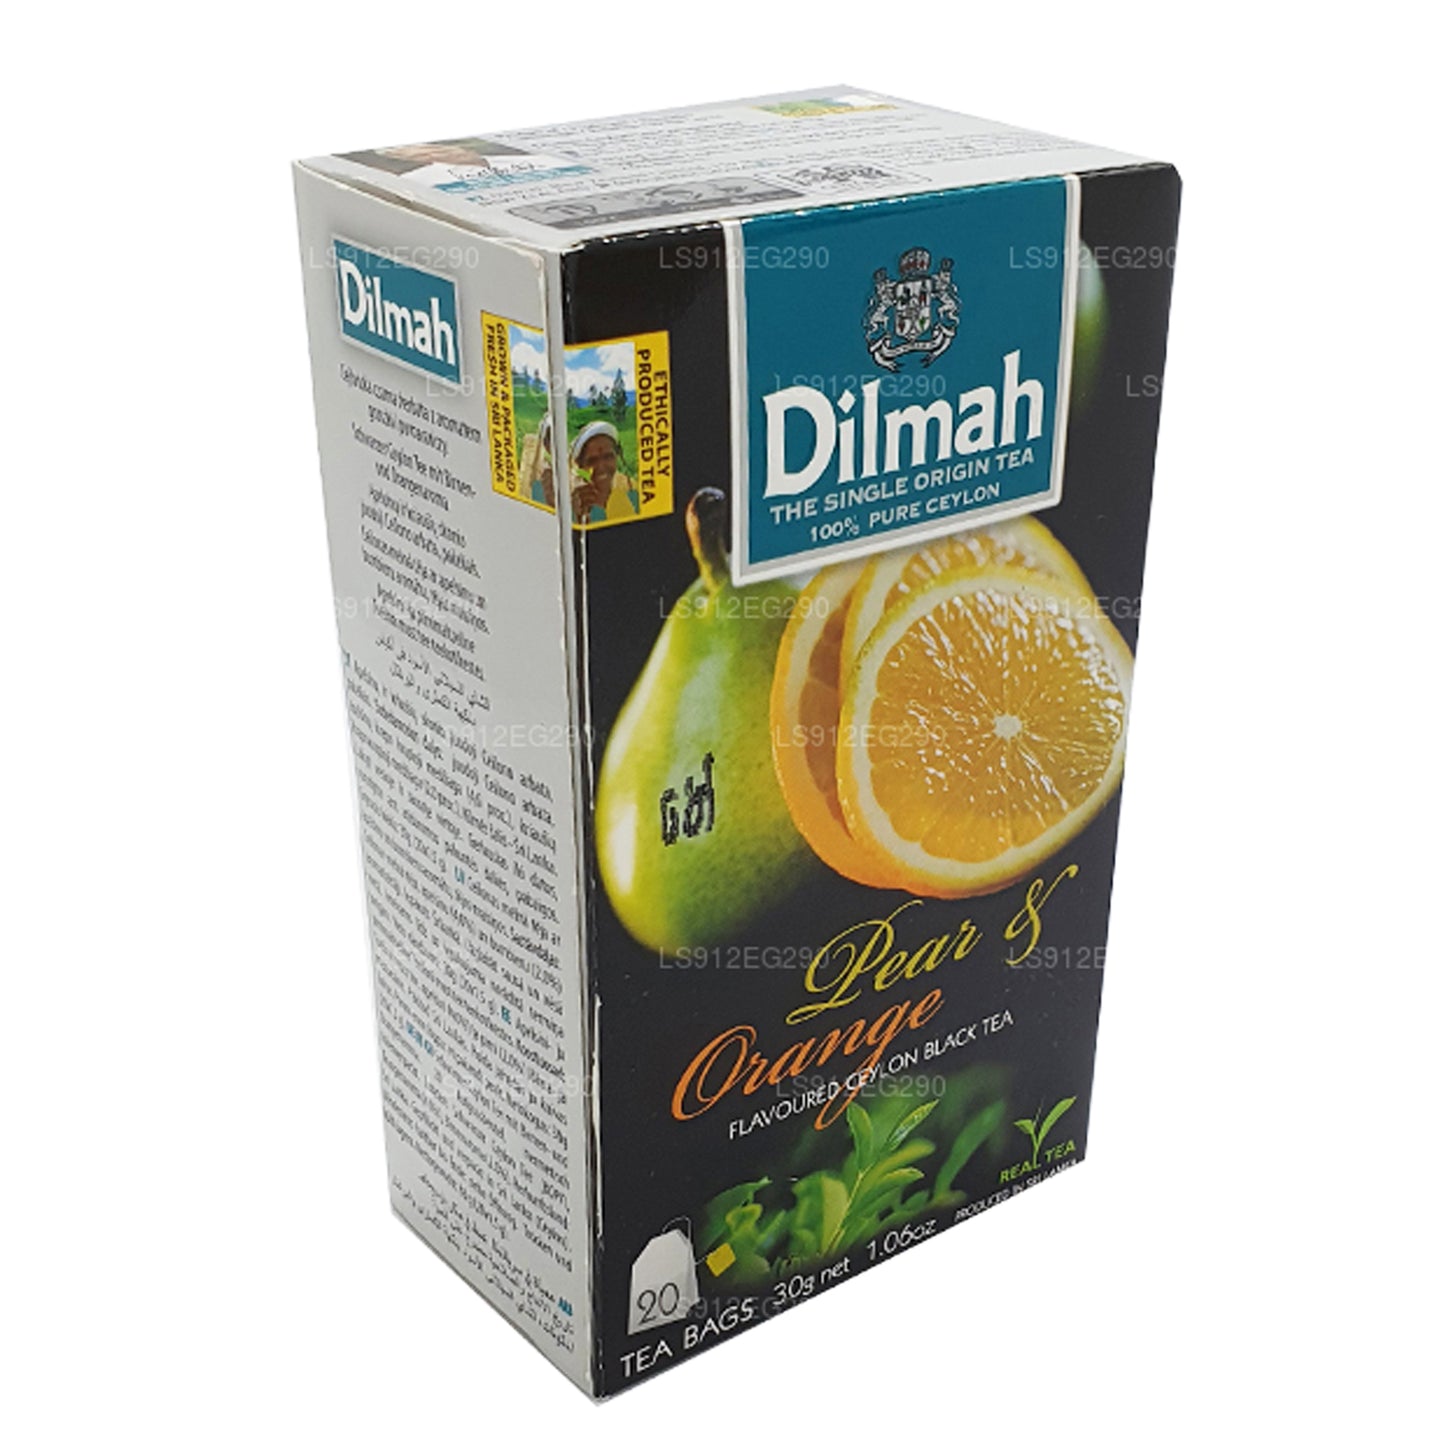 Té negro de Ceilán Dilmah con sabor a pera y naranja (30 g) 20 bolsitas de té